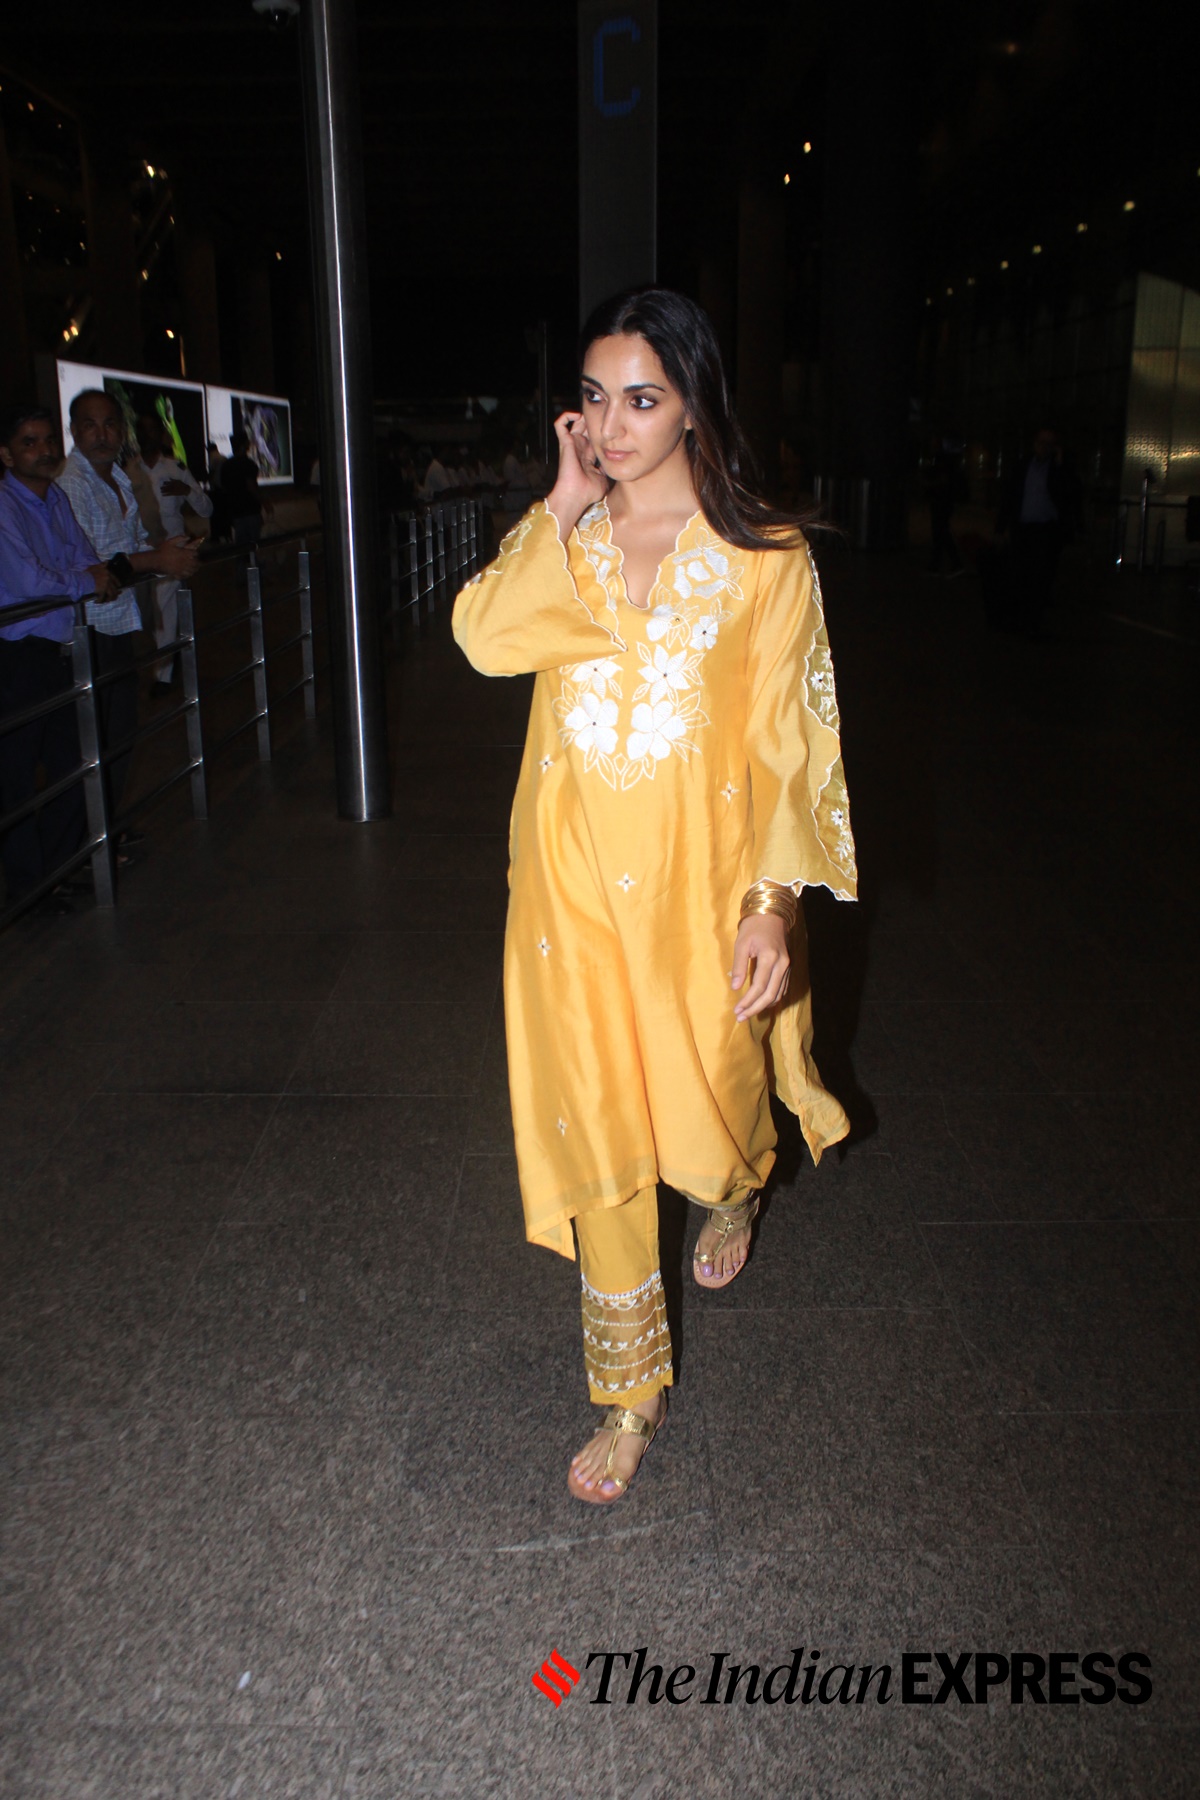 Kiara Advani Spotted At Mumbai Airport - YouTube